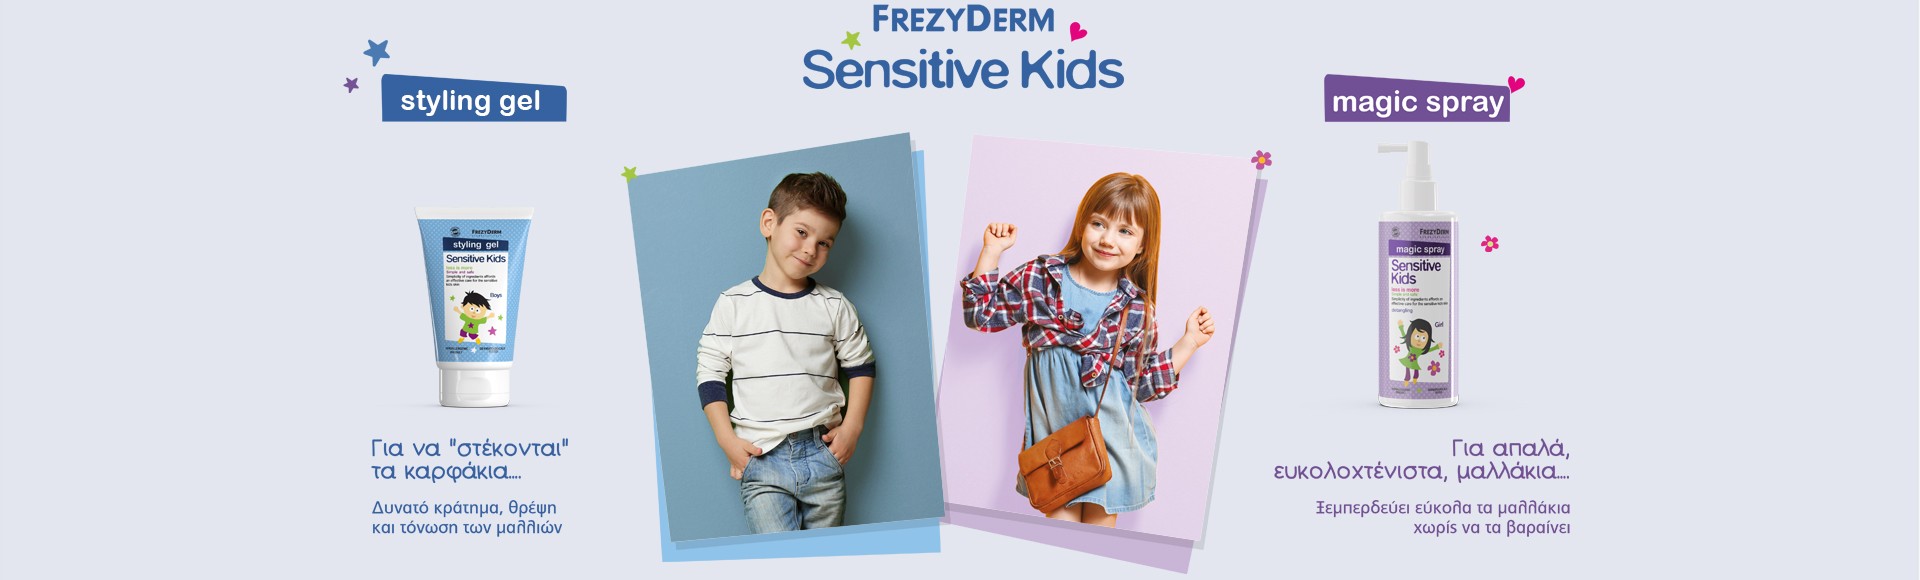 Frezyderm - Sensitive Kids